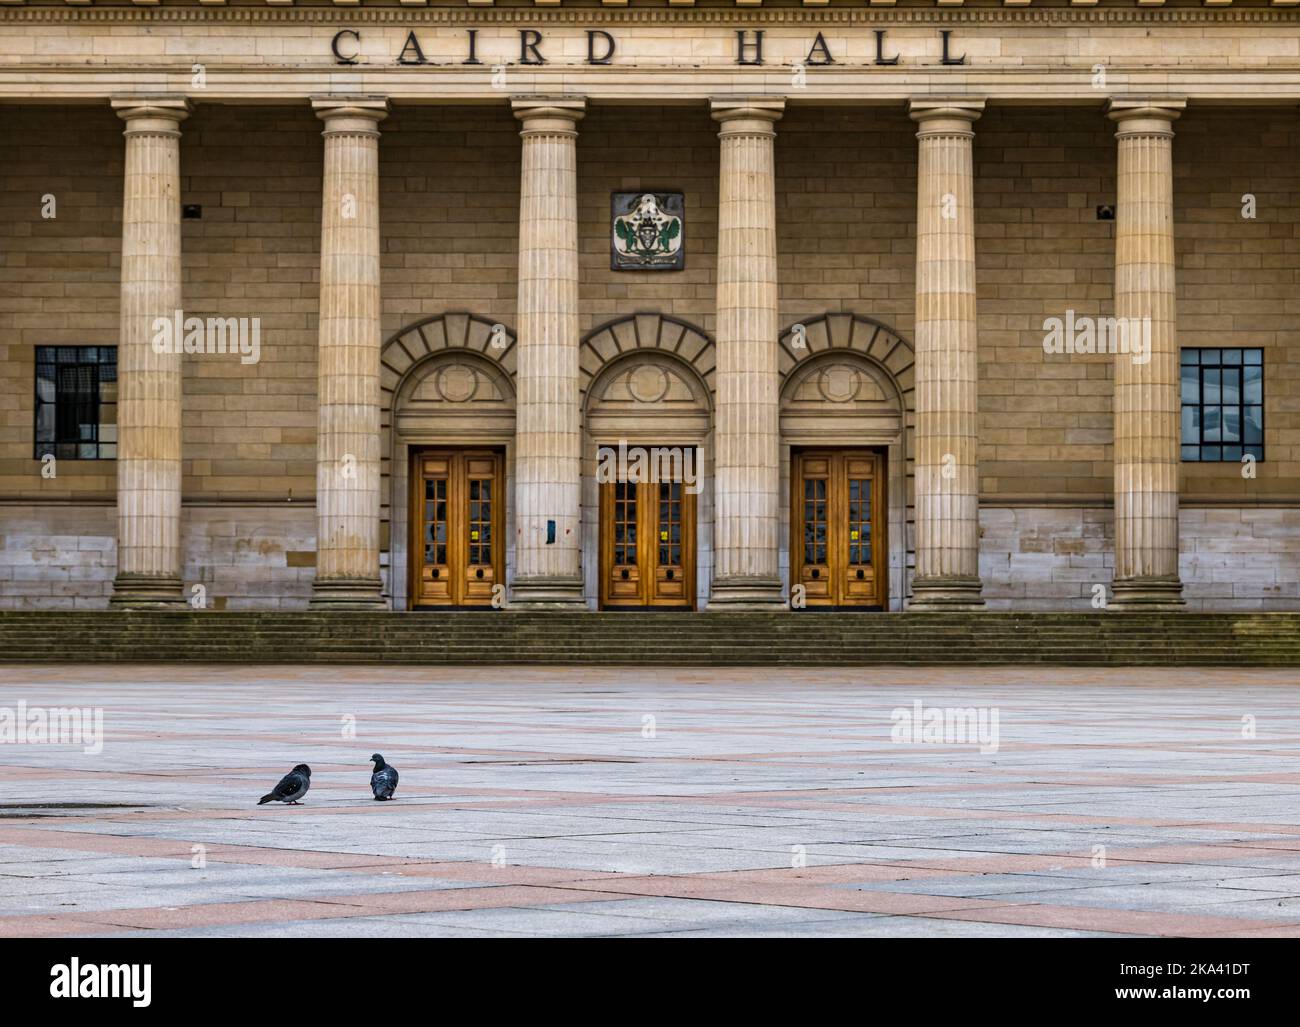 Grand Pillars und Doors of Caird Hall in City Square, Dundee, Schottland, Großbritannien Stockfoto